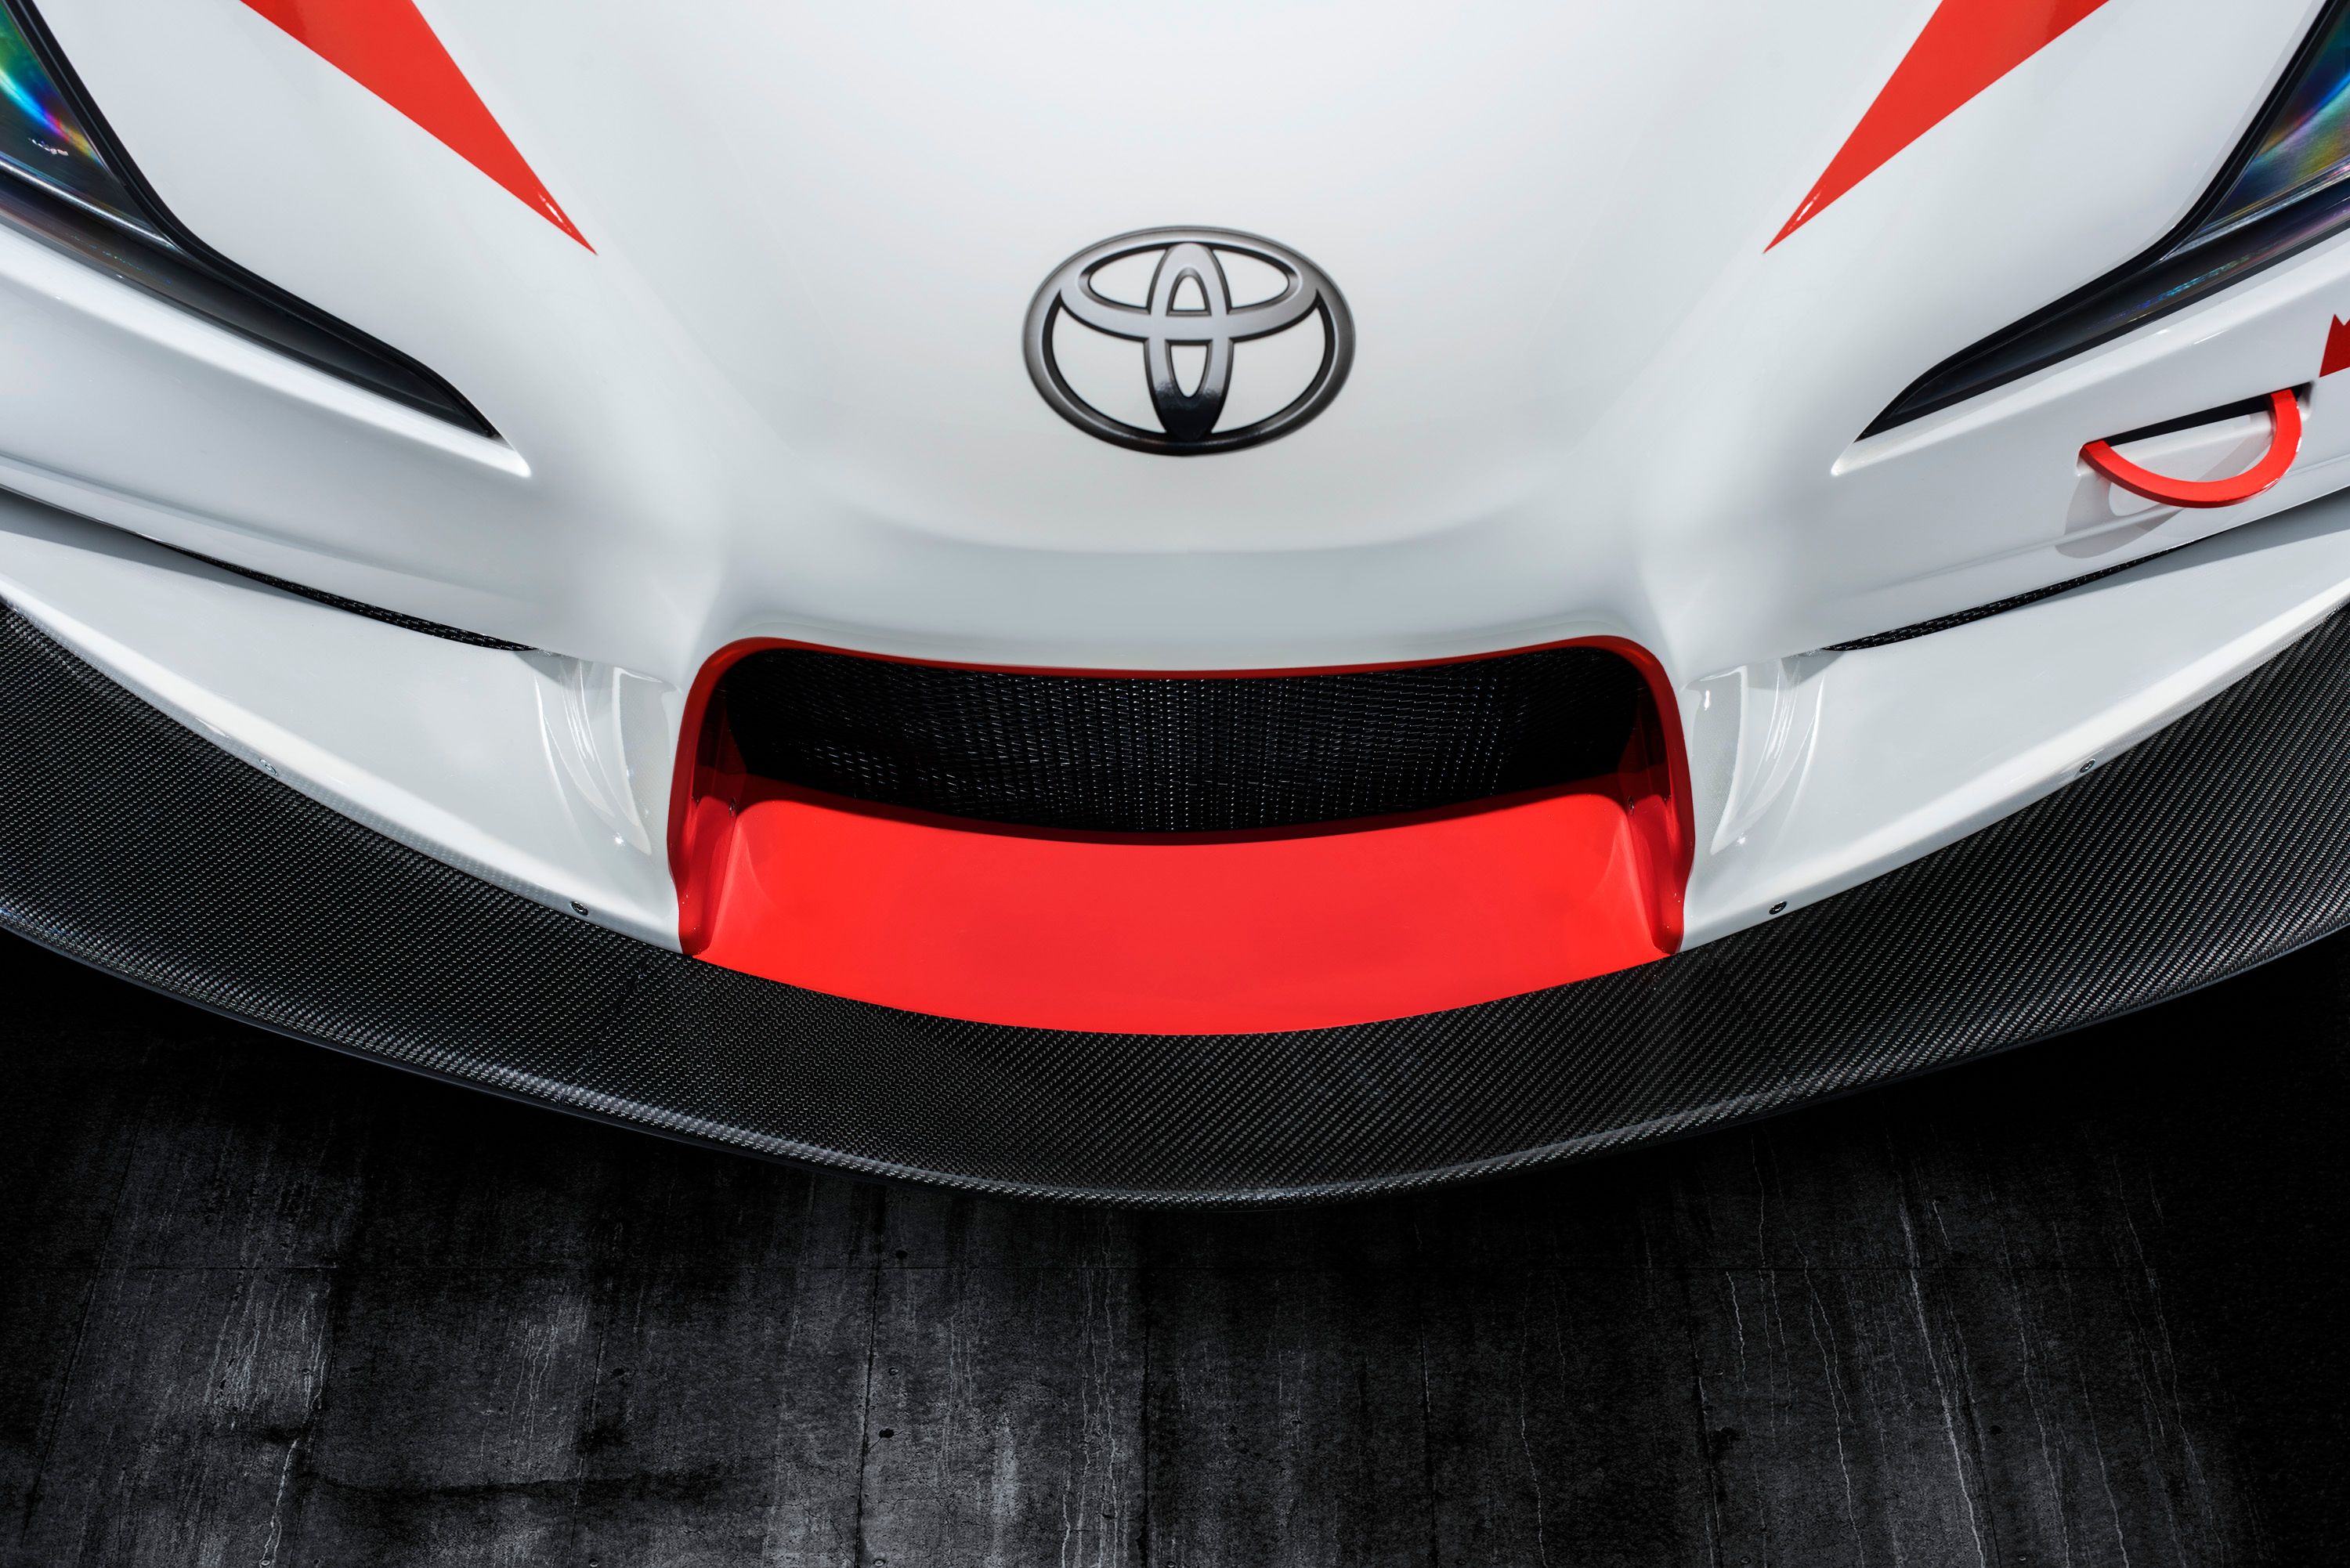 2018 Toyota GR Supra Racing Concept